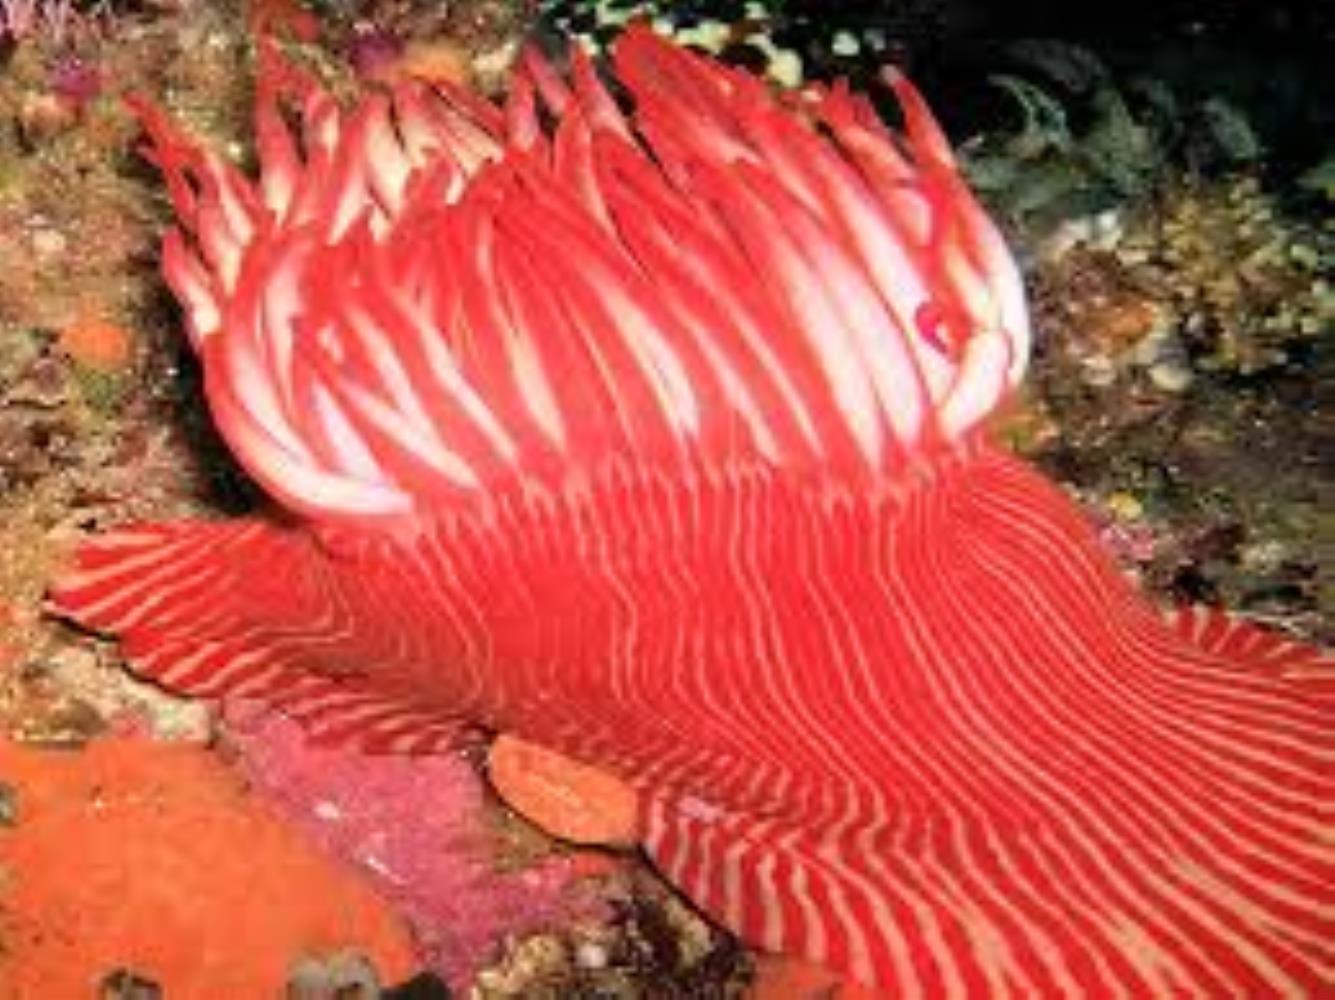 Candy-striped anemone